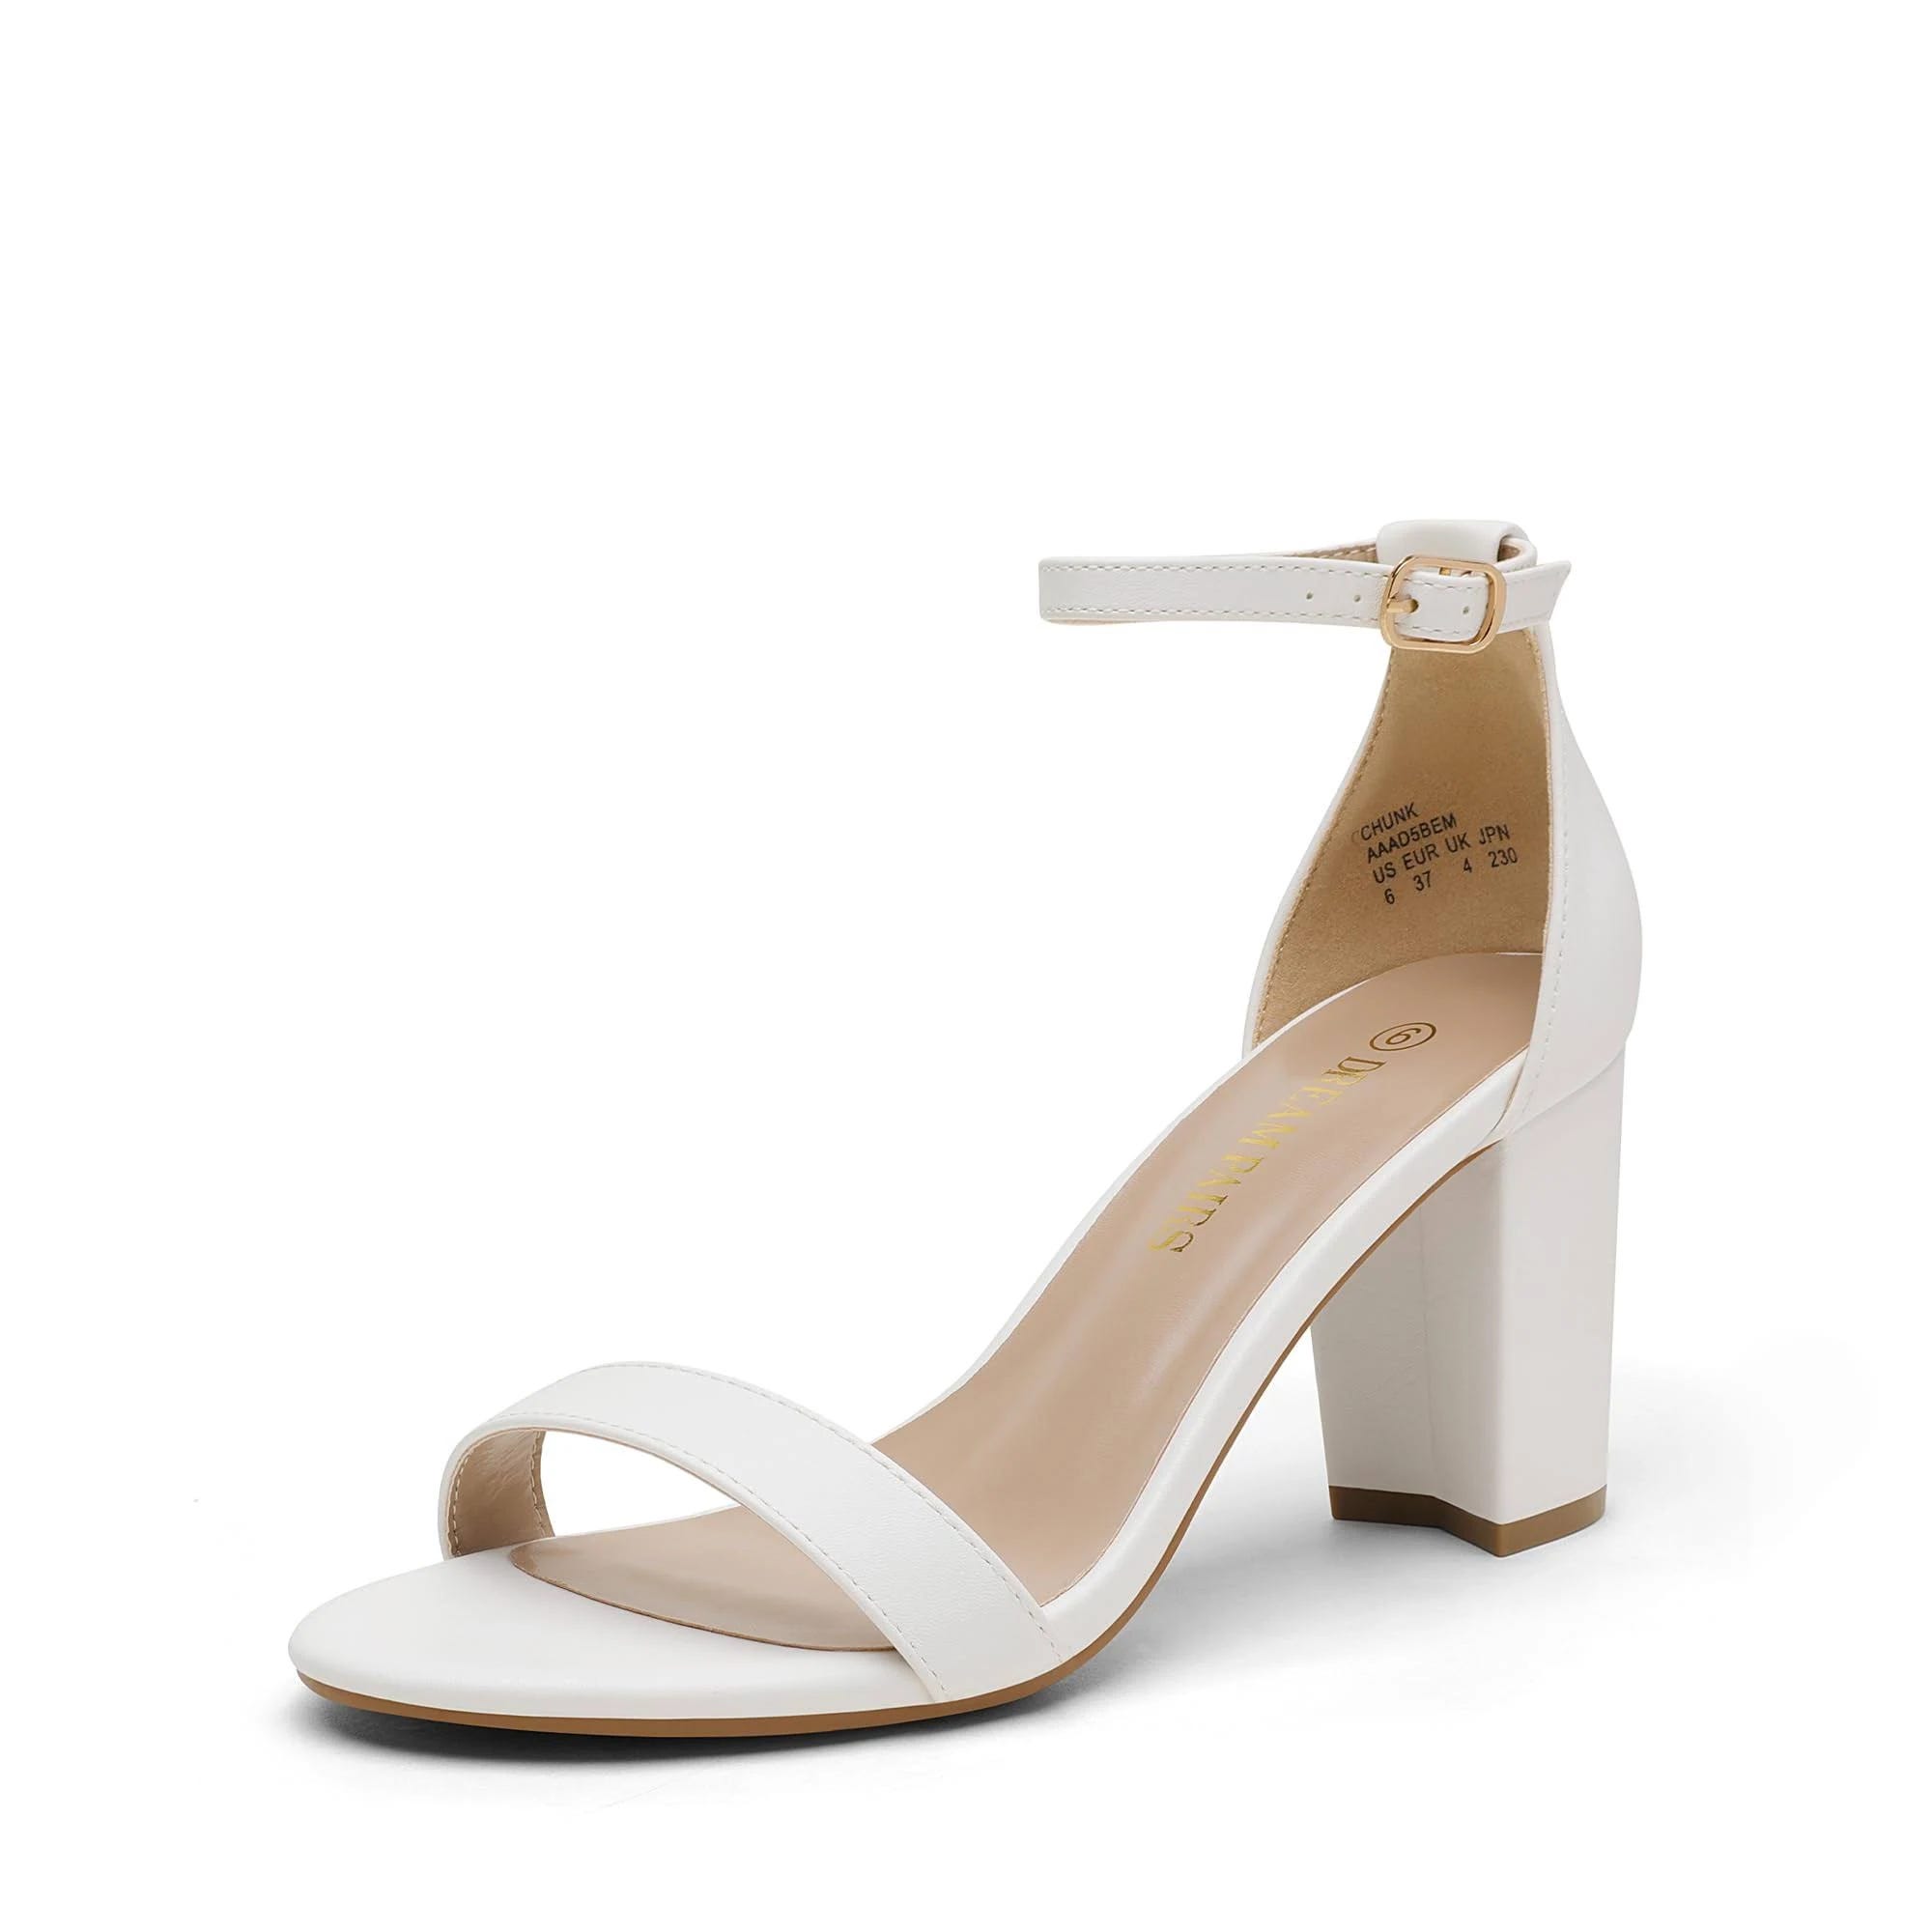 Attractive Rubber Platform Sandal with Adjustable Ankle Strap | Image